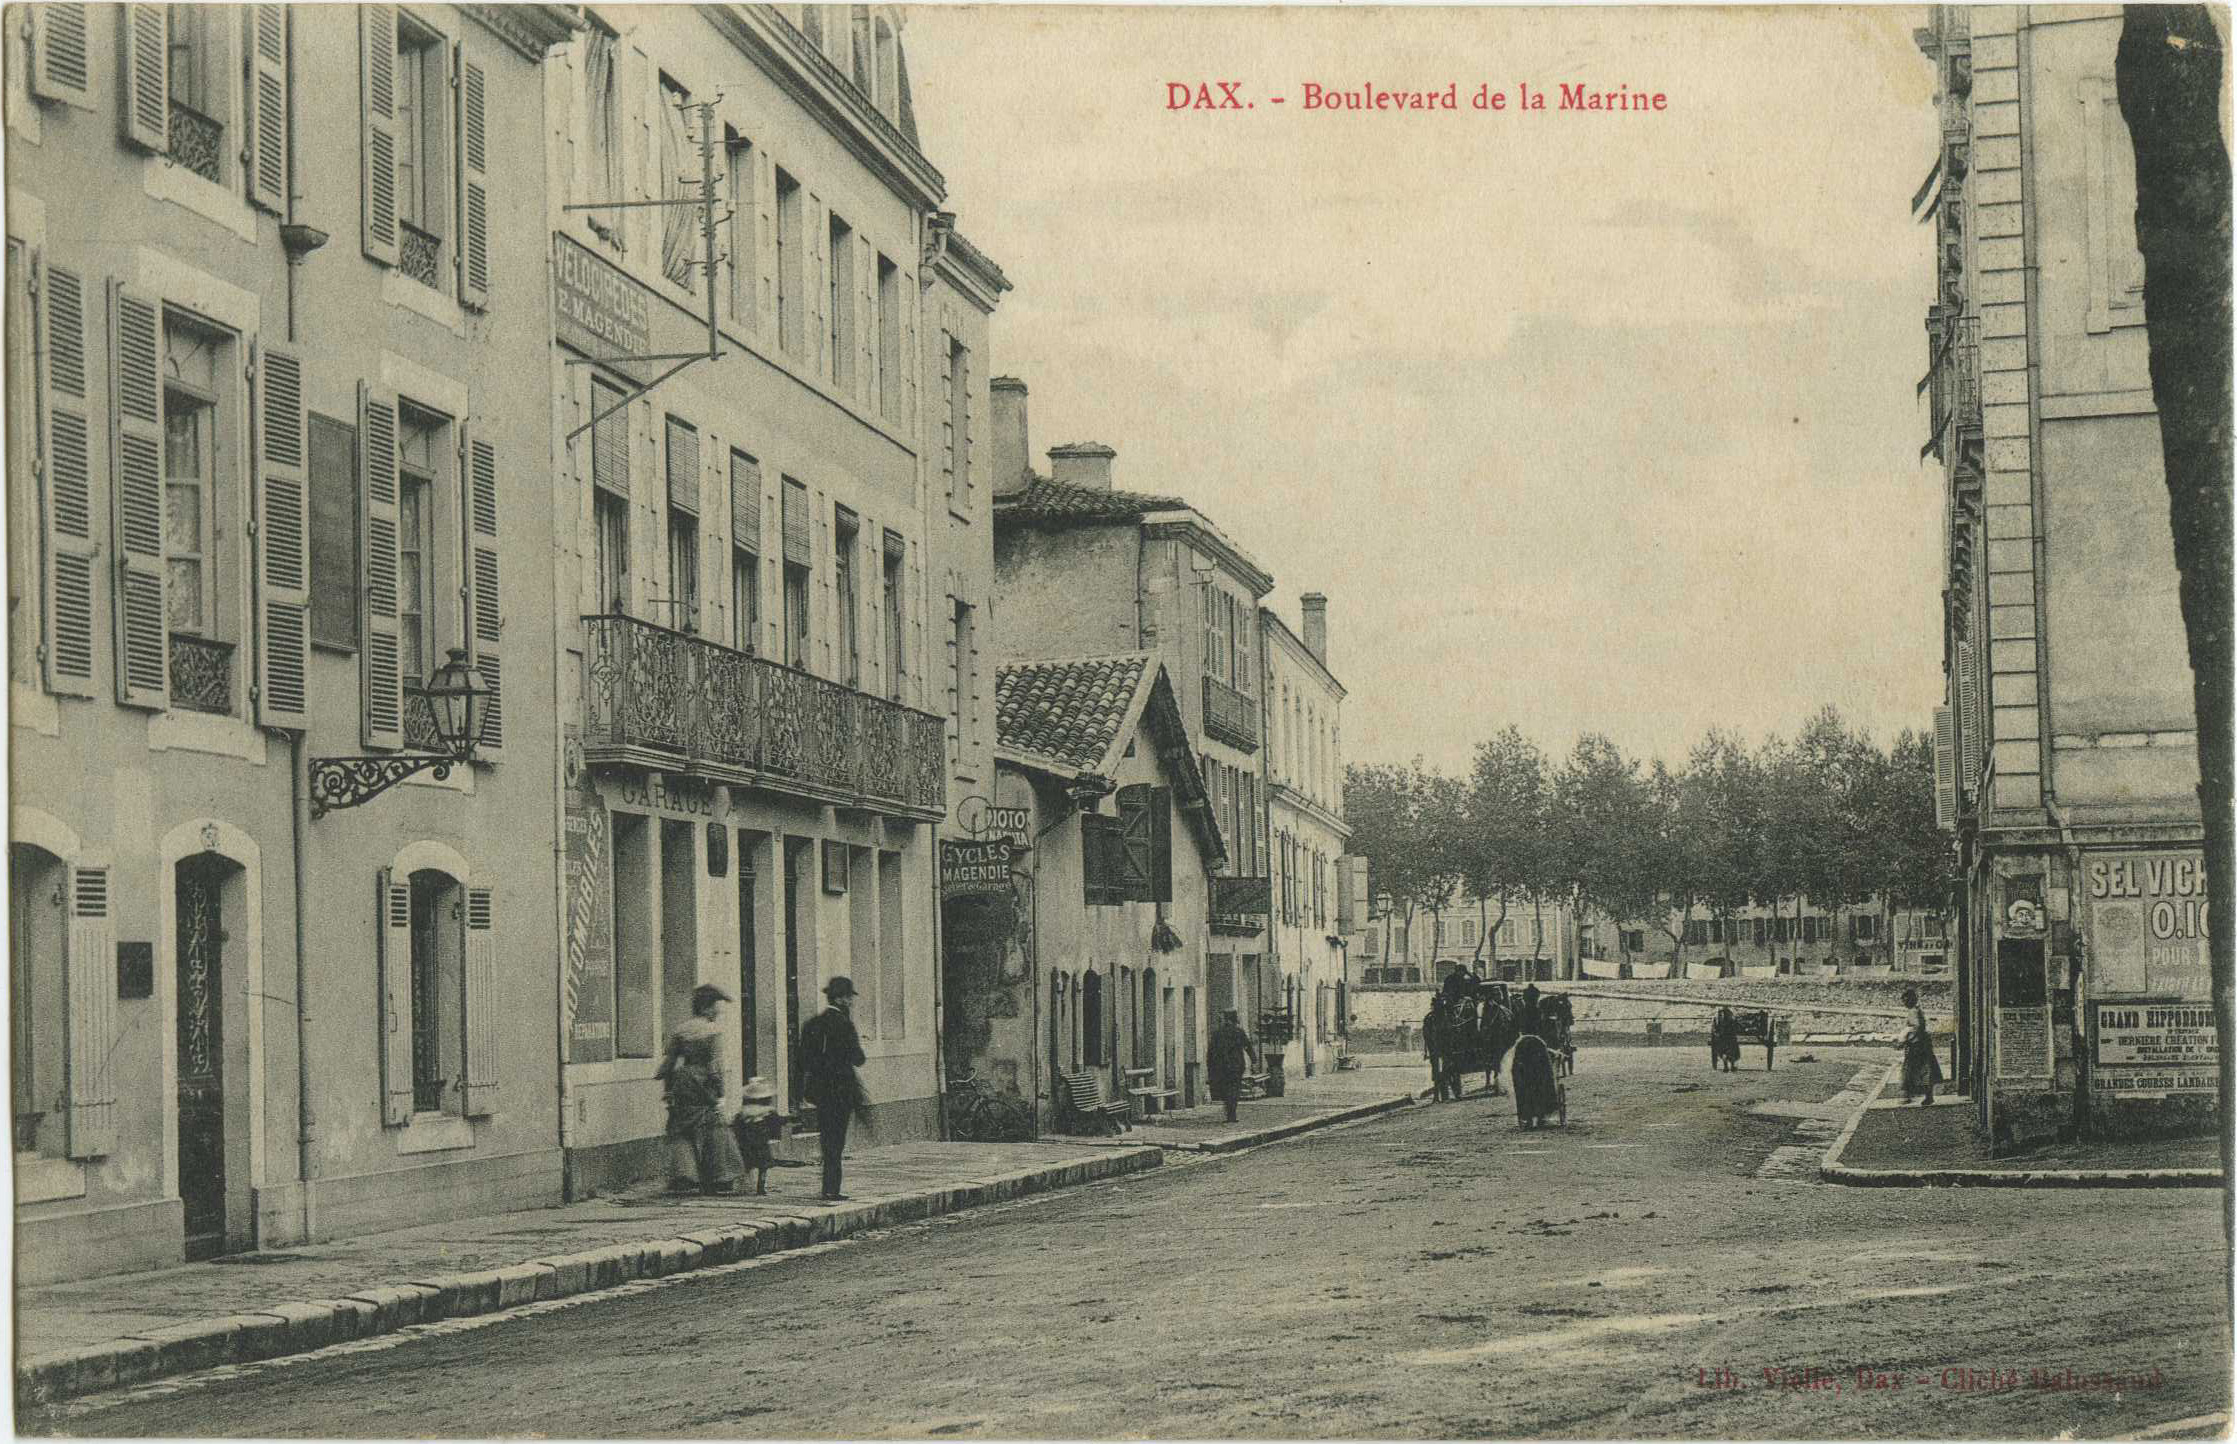 Dax - Boulevard de la Marine